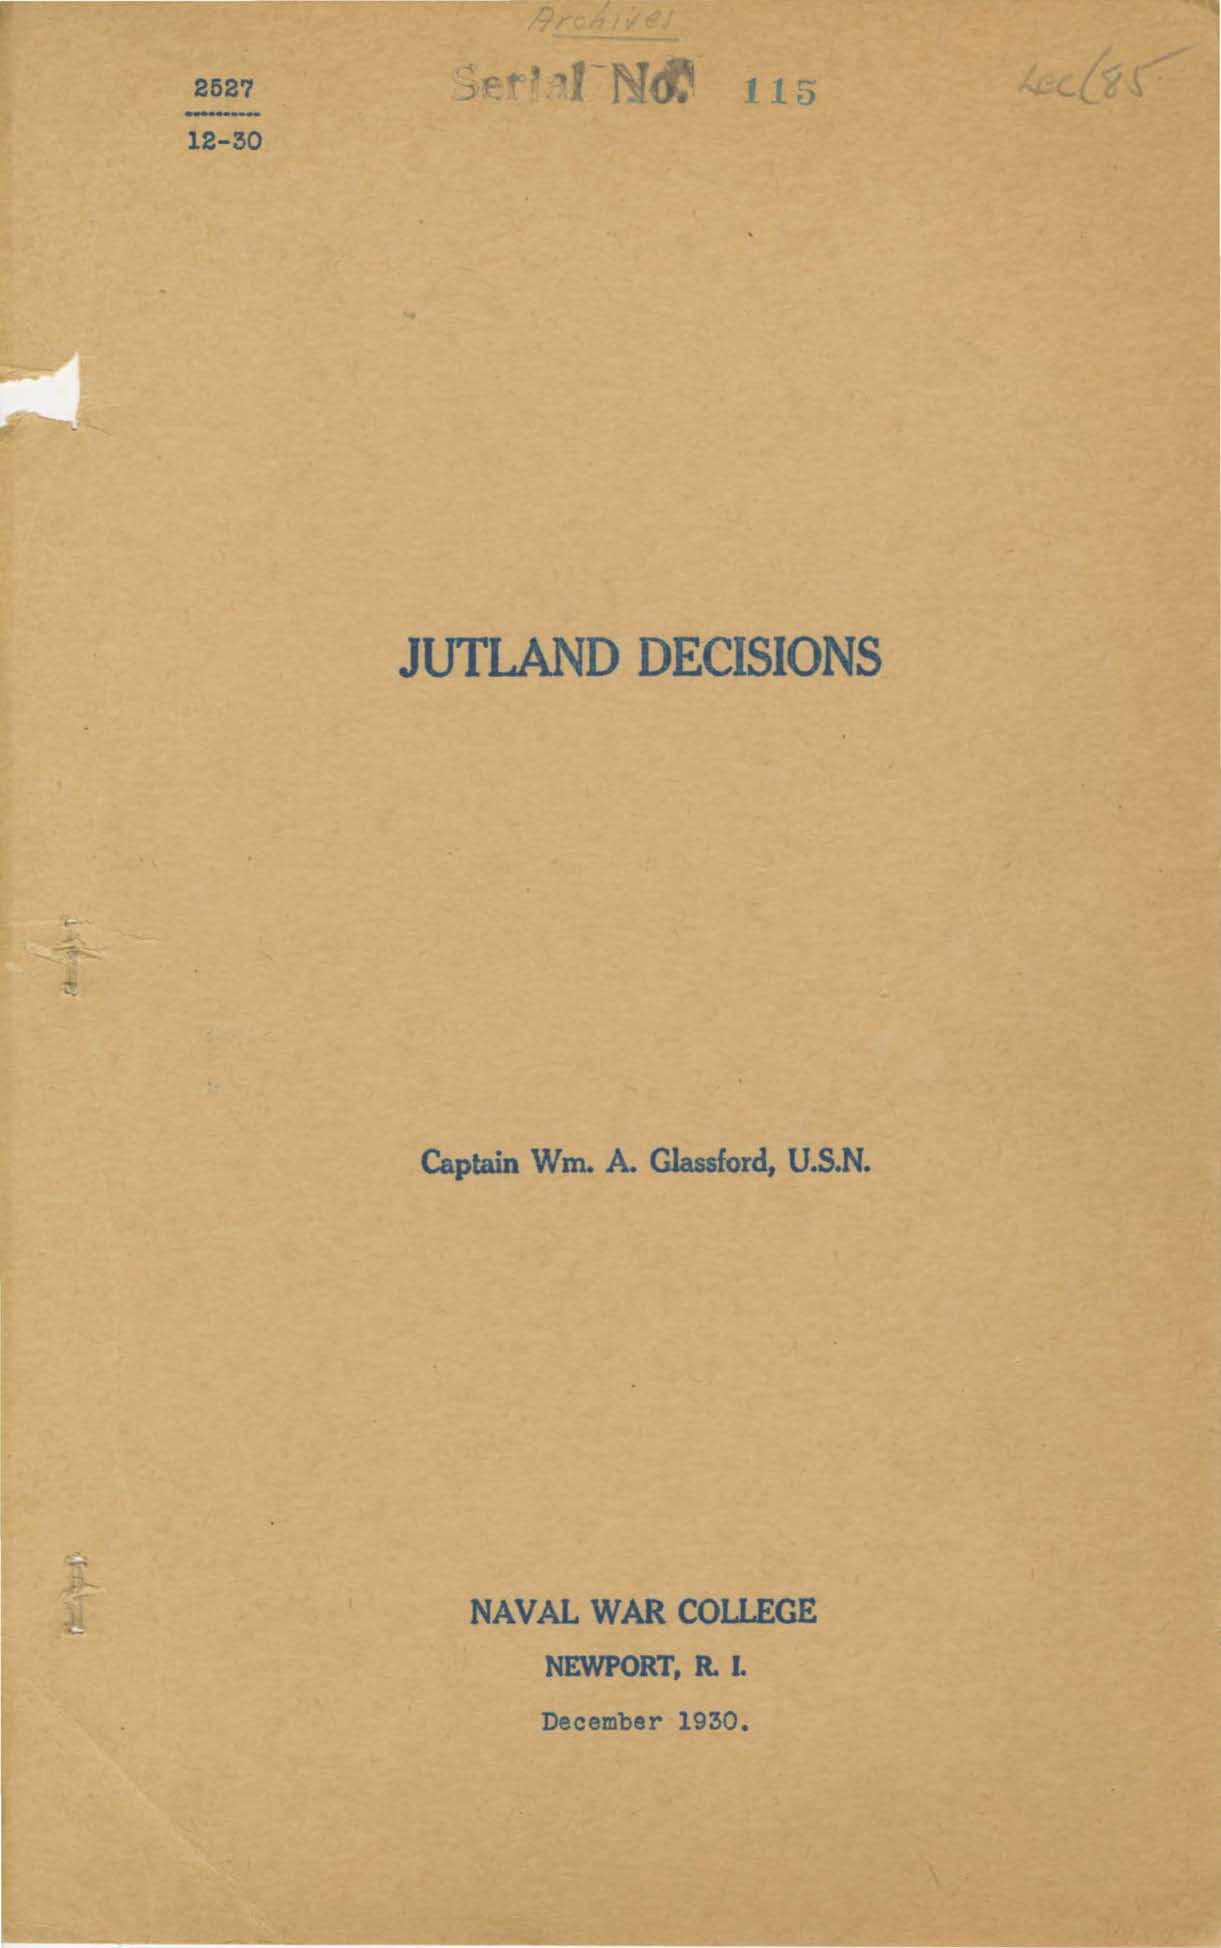 Jutland Decisions, William A. Glassford